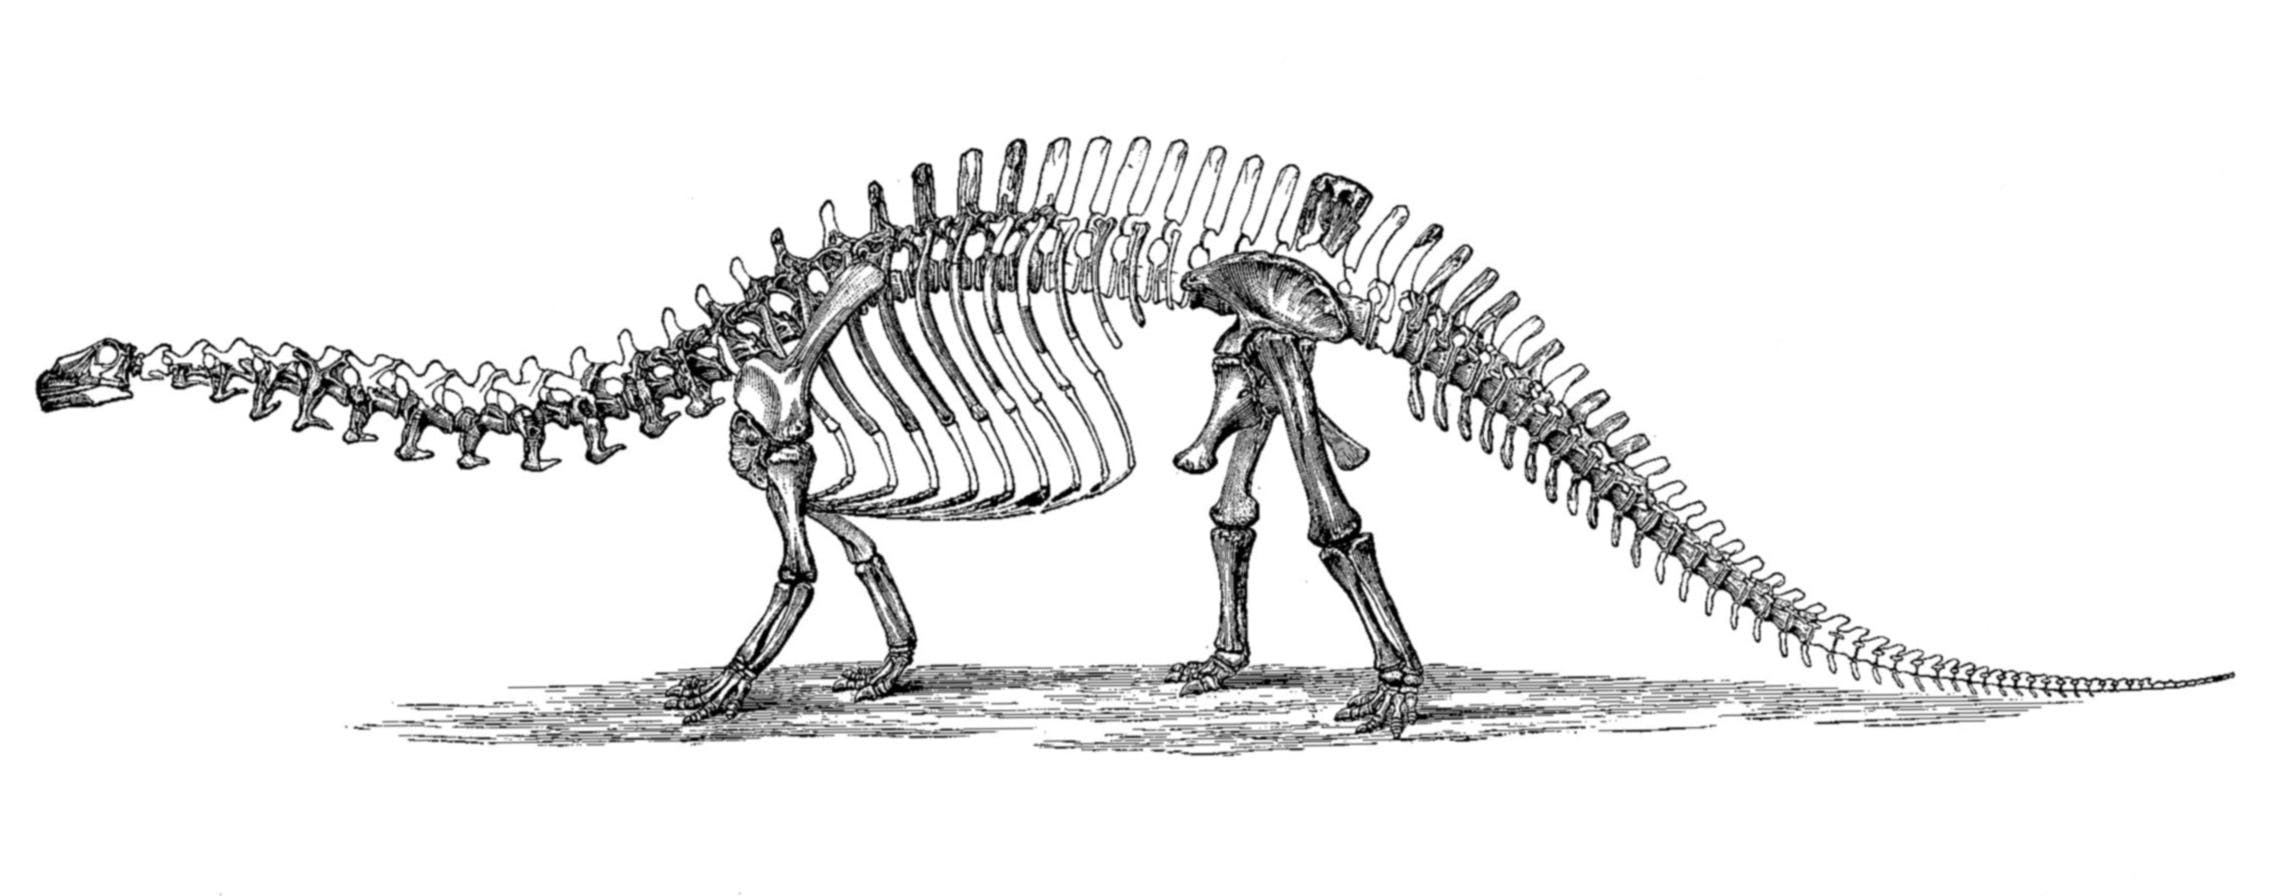 Hero section Image of a dinosaur skeleton walking on dirt